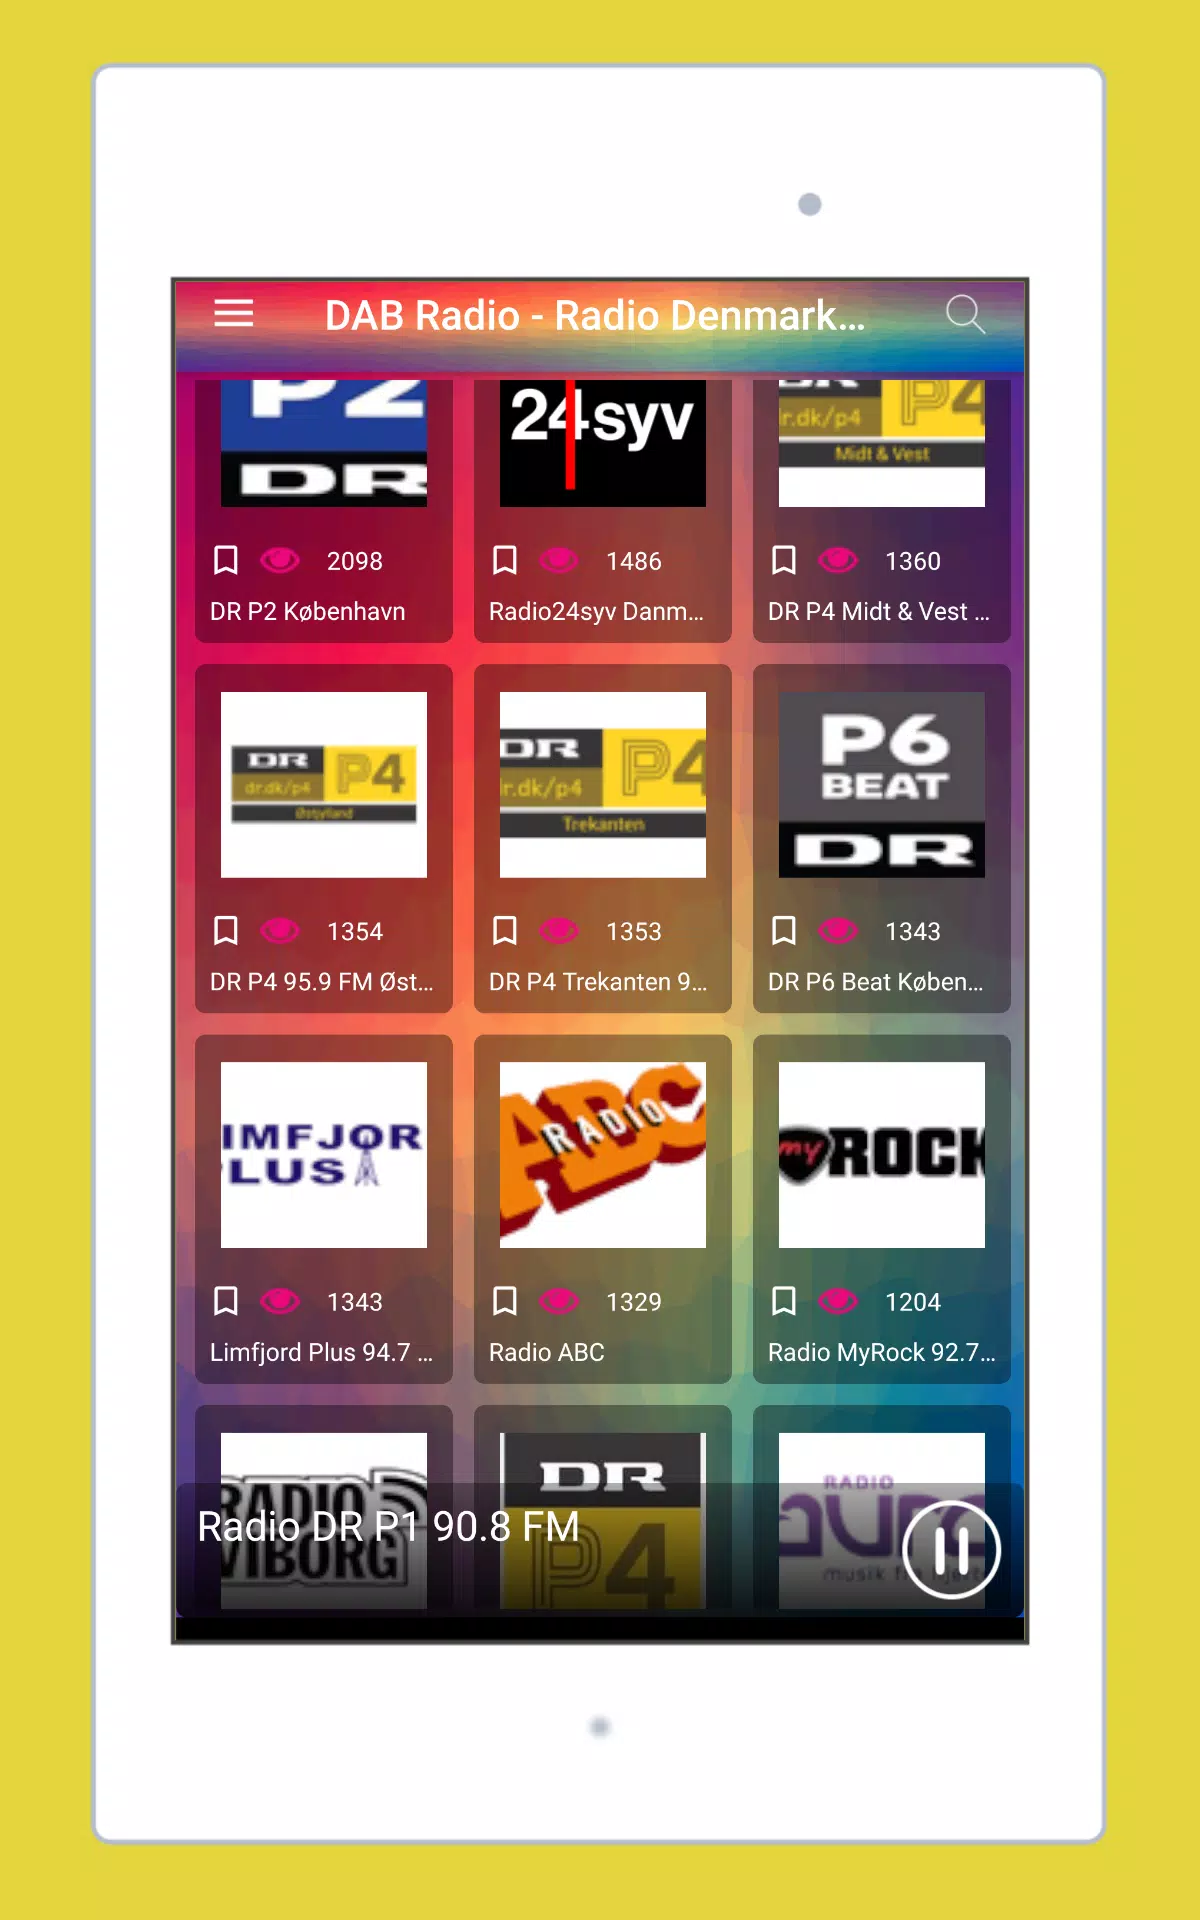 Radio Denmark - DAB Radio + Danish Radio Stations for Android - APK Download